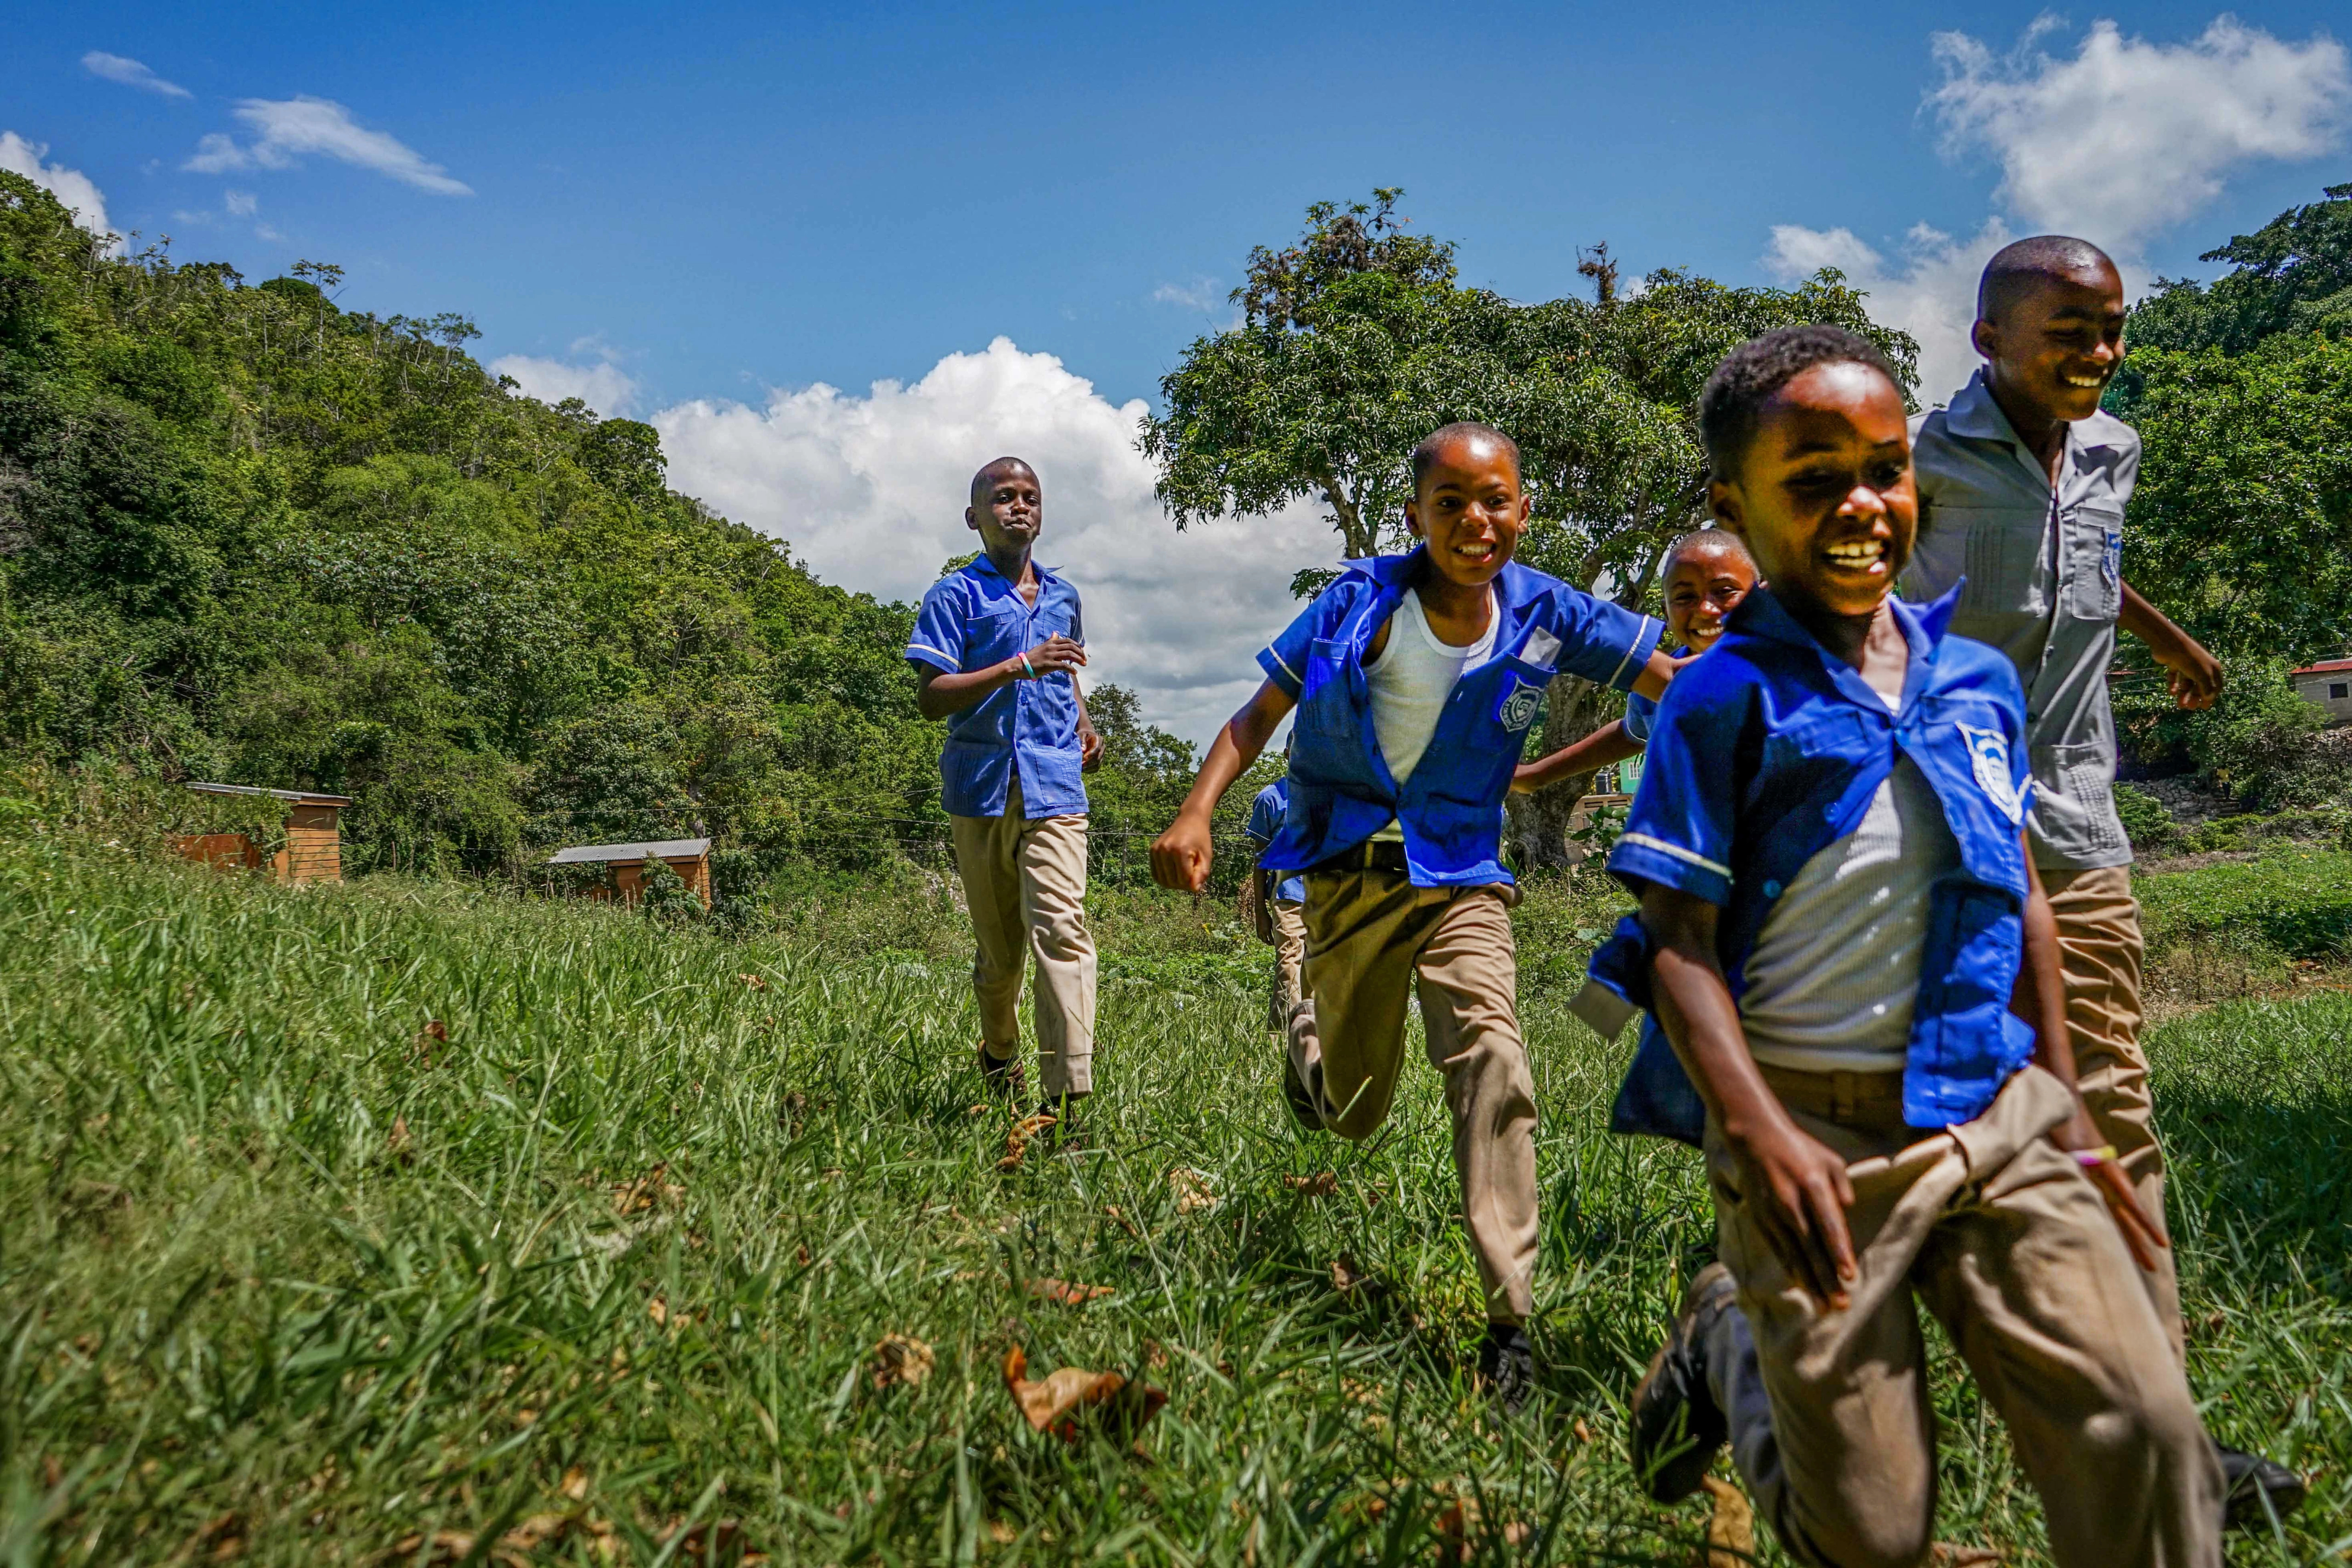 Children of African descent running in a field